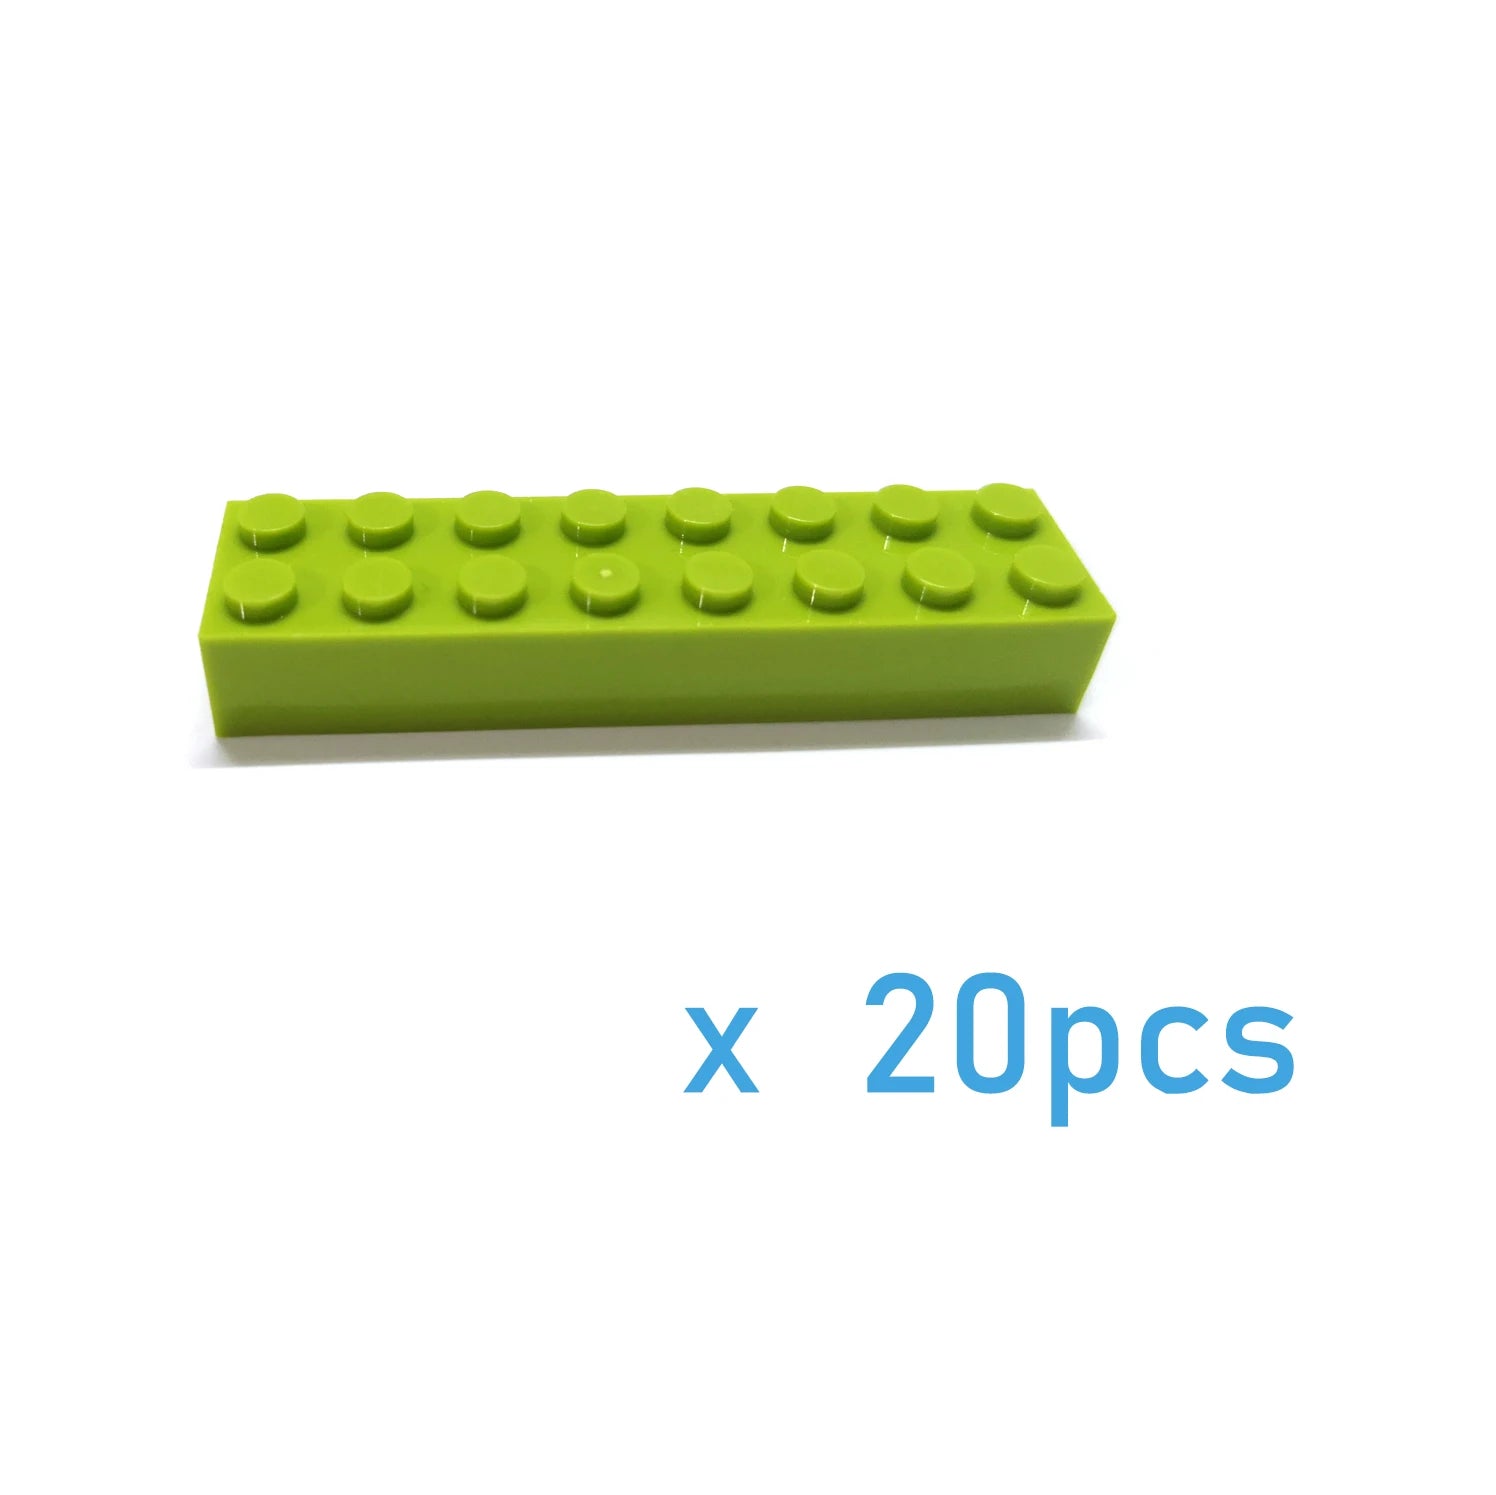 20pcs DIY Building Blocks Thick 2x8 Dots Educational Creative Toys for Children Figures Plastic Bricks Size Compatible With 3007